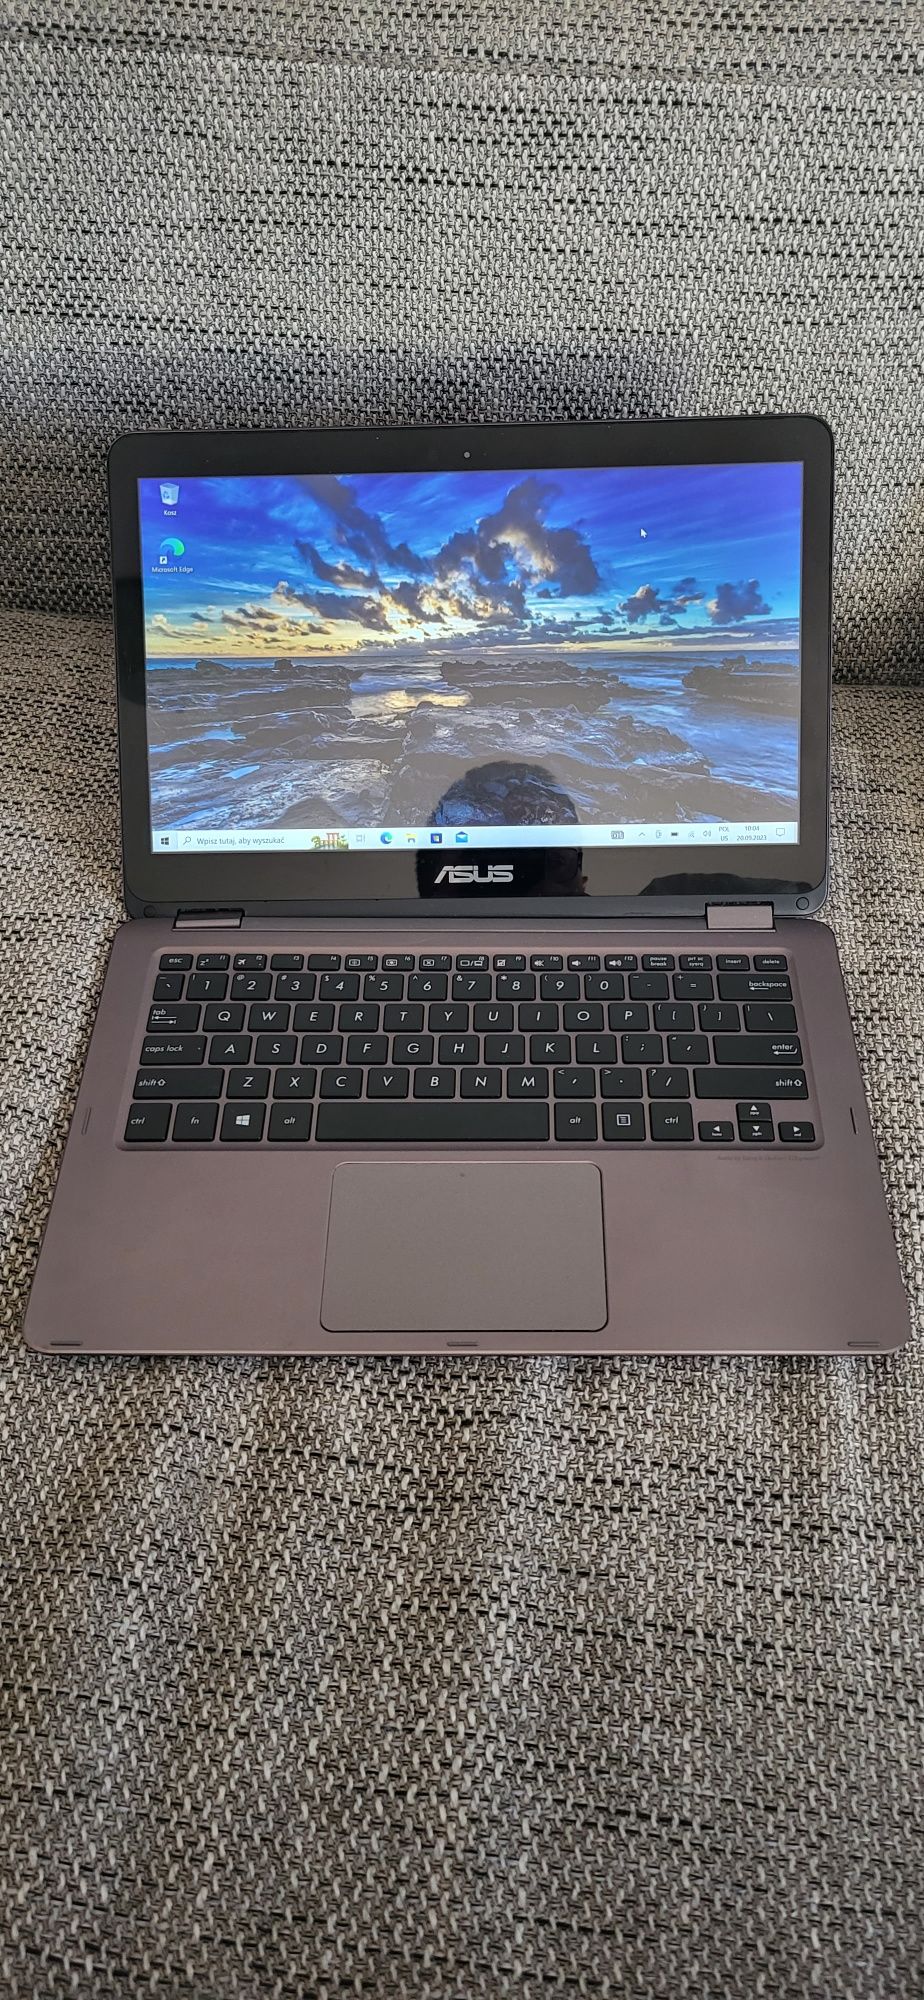 Laptop Asus Zenbook